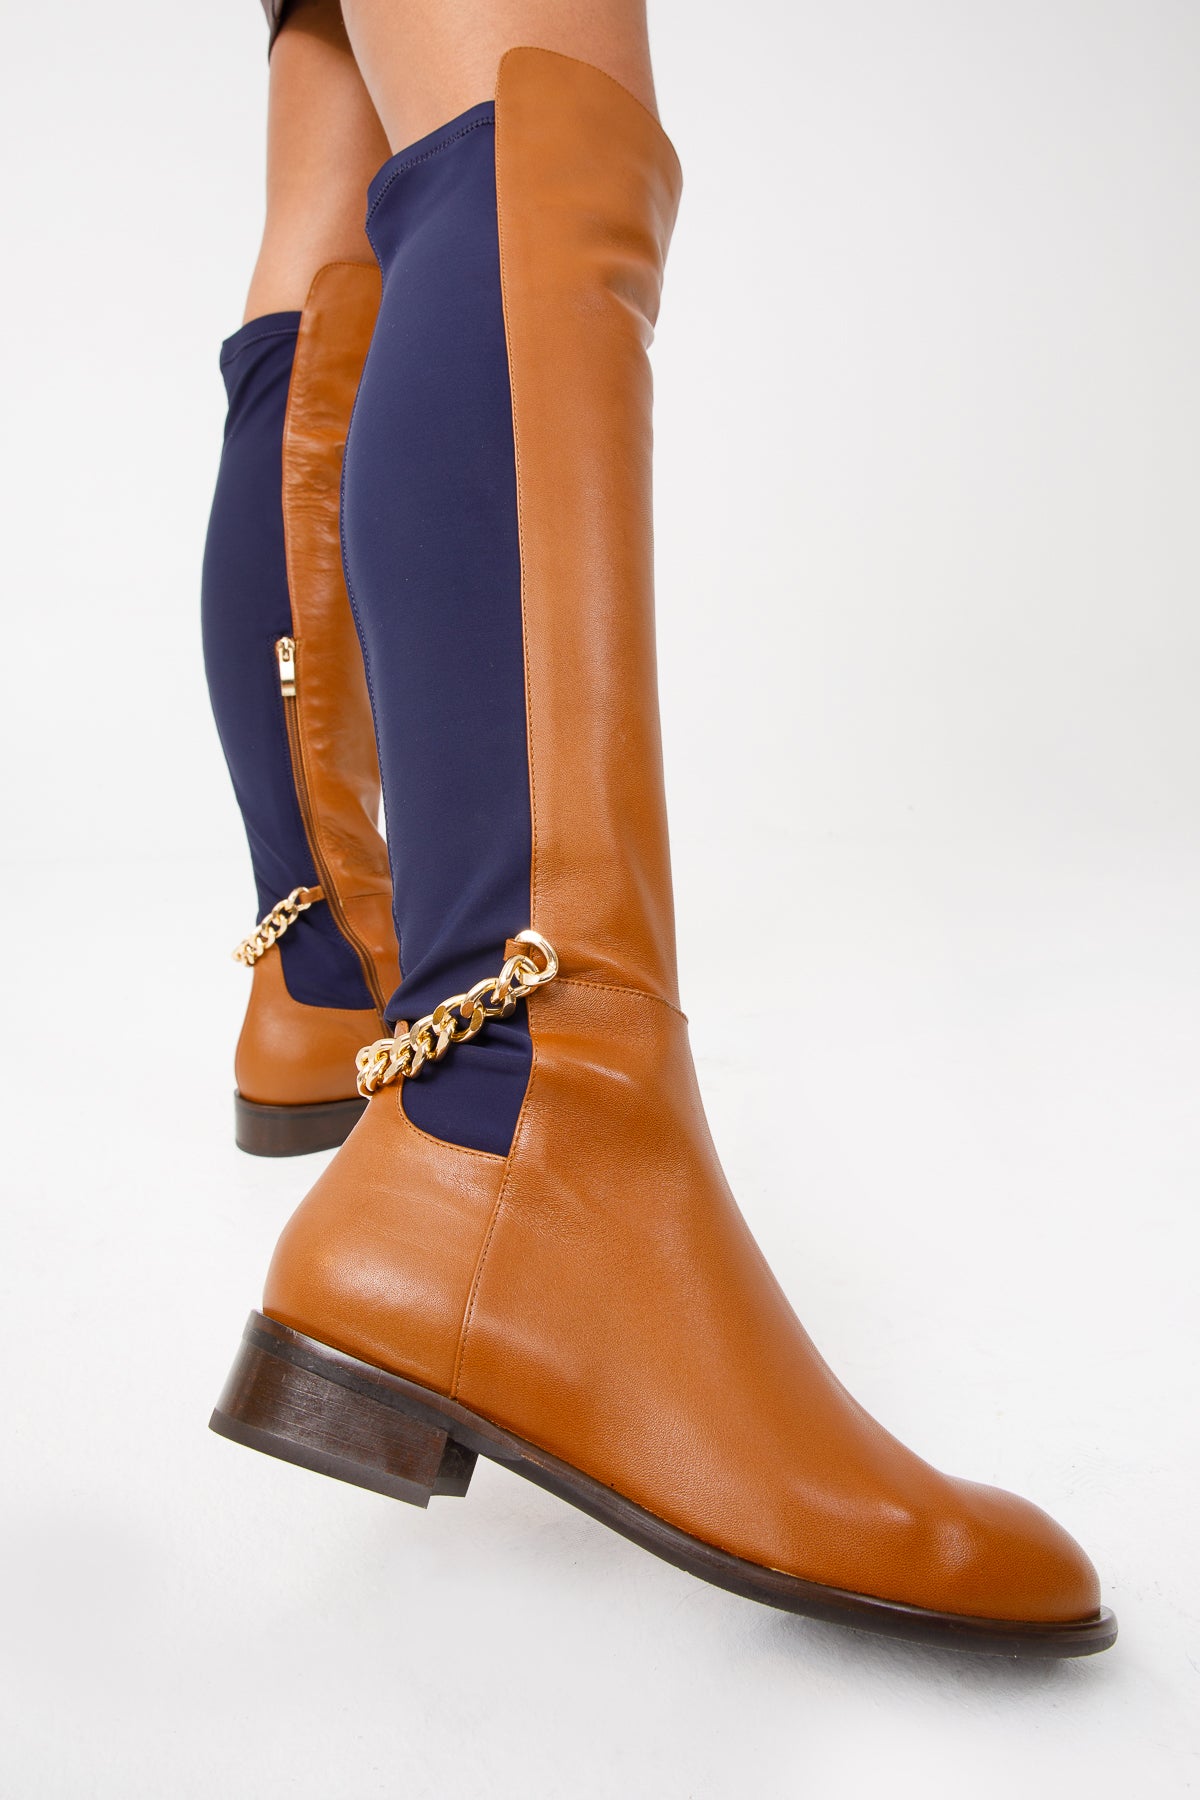 The Tallin Tan Leather Knee High Women Boot